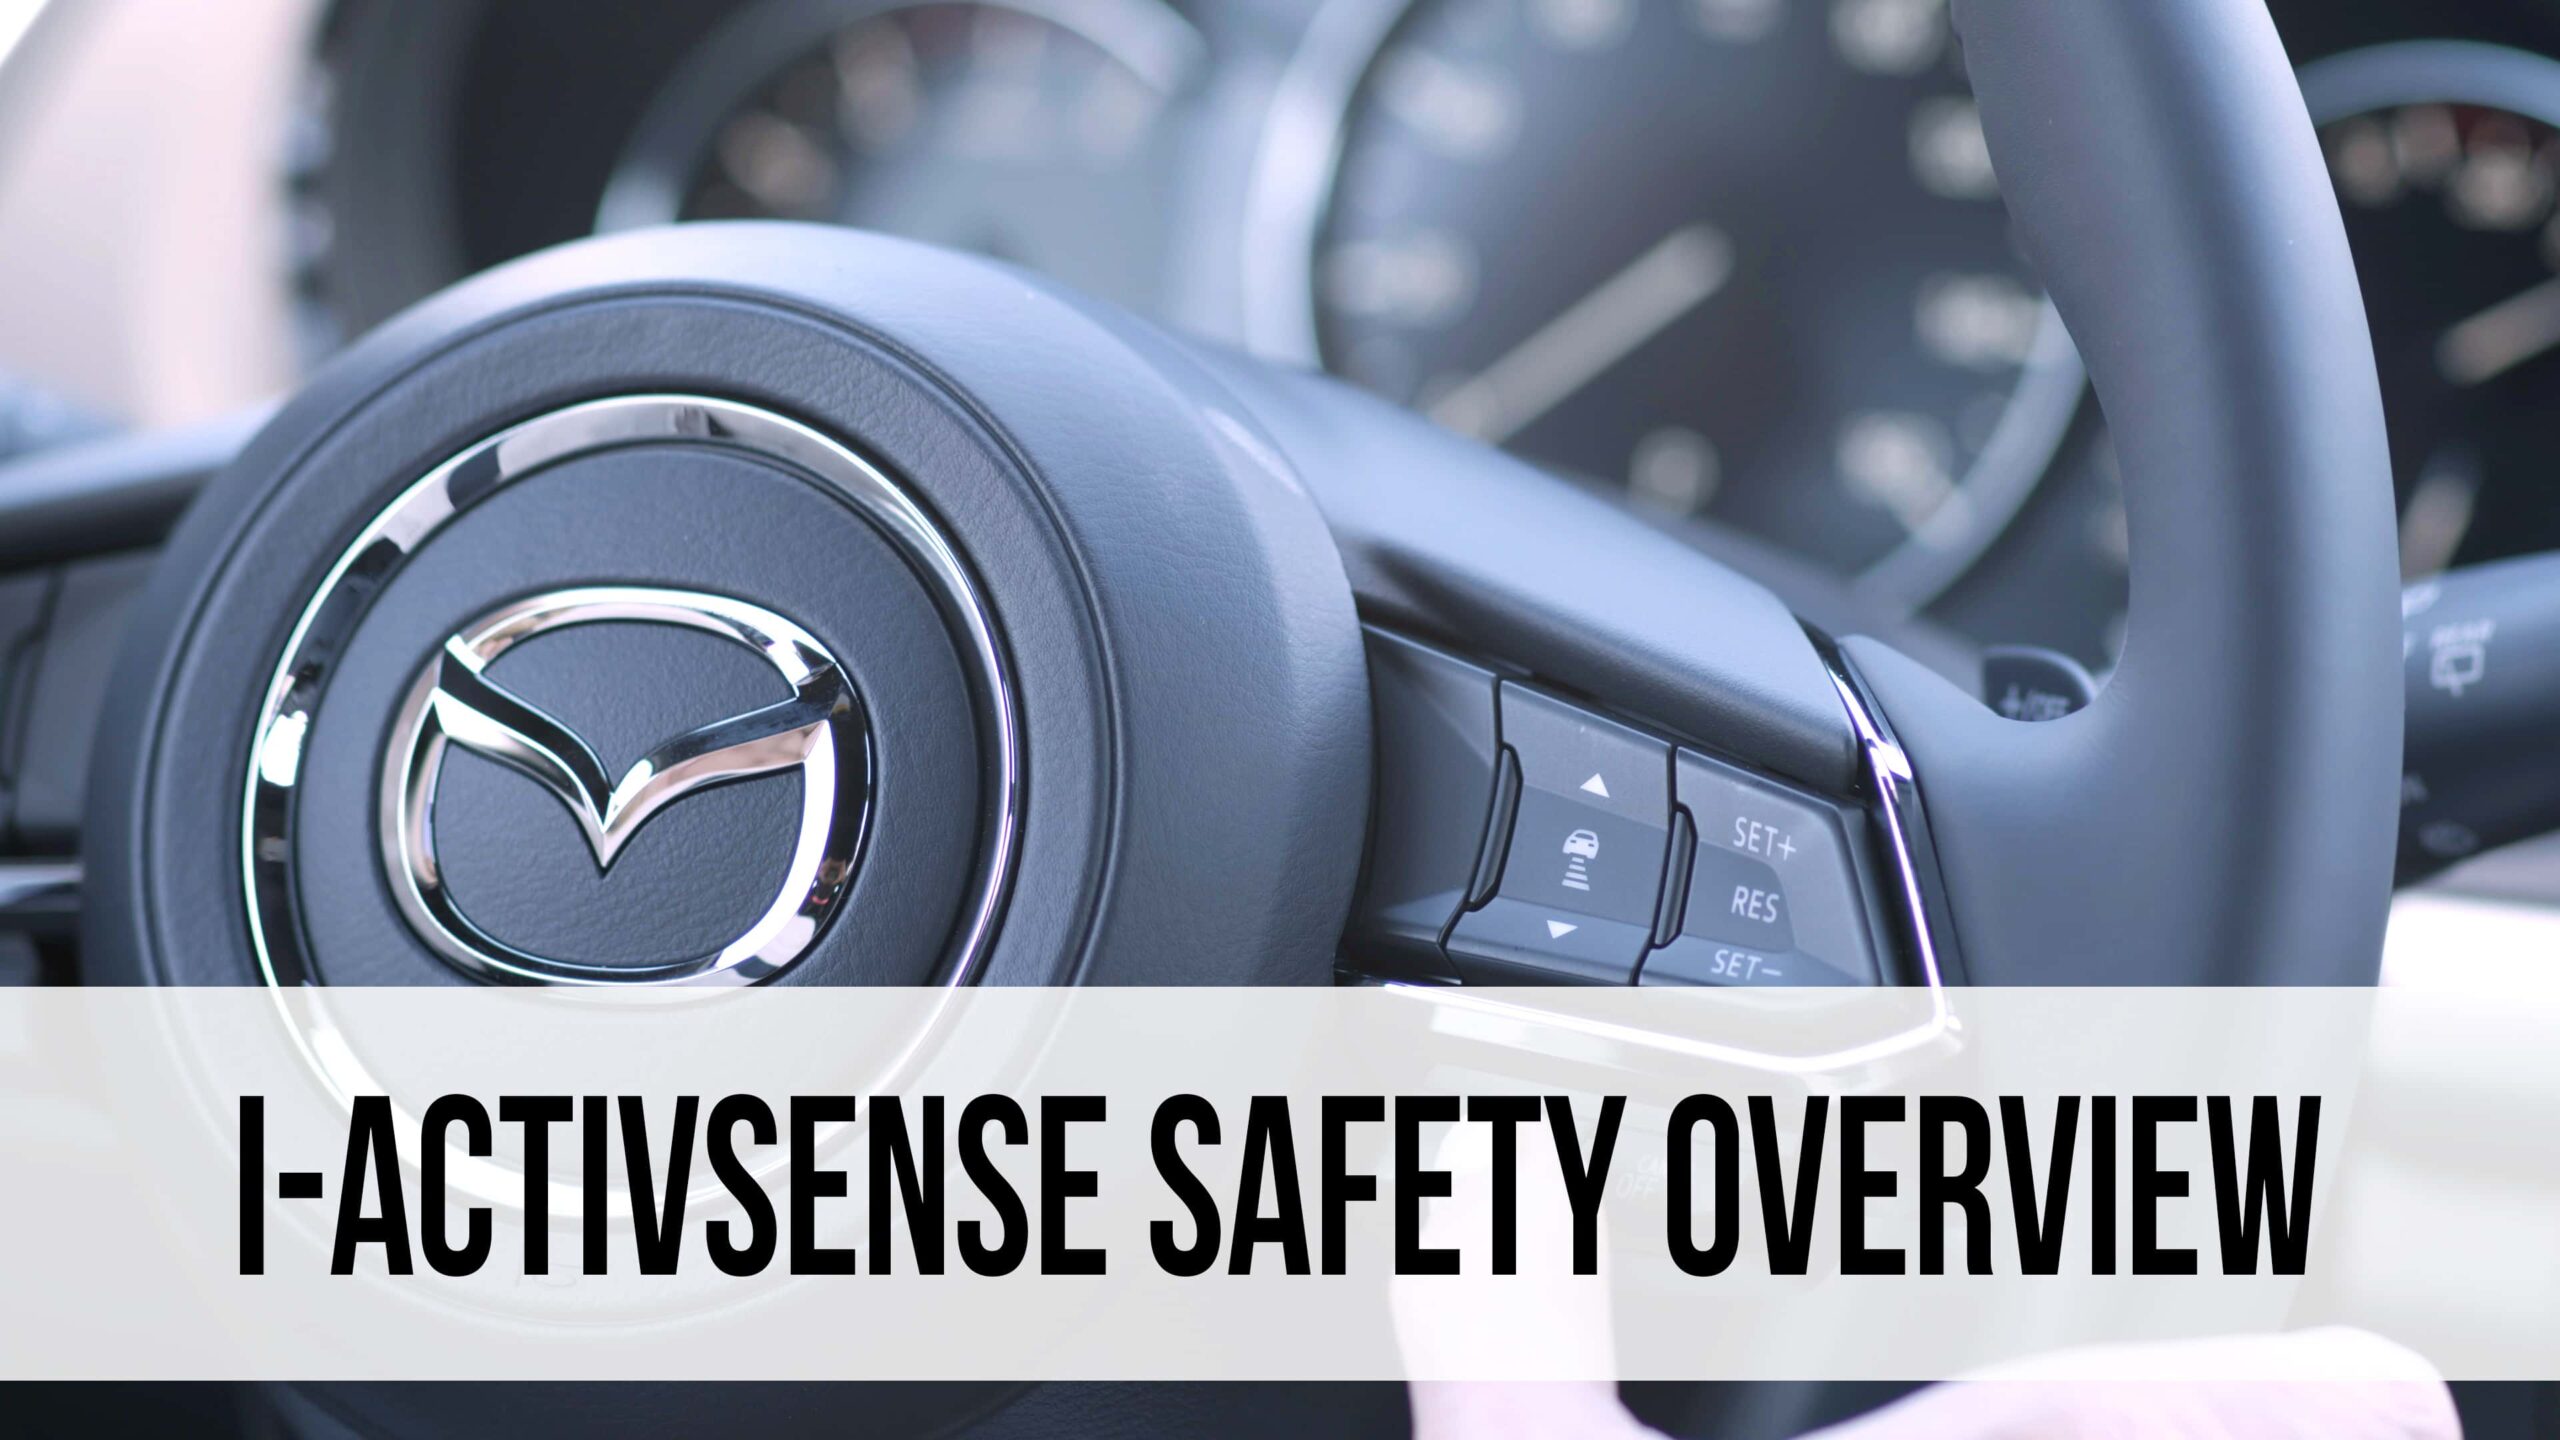 i-Activsense Safety tech overview